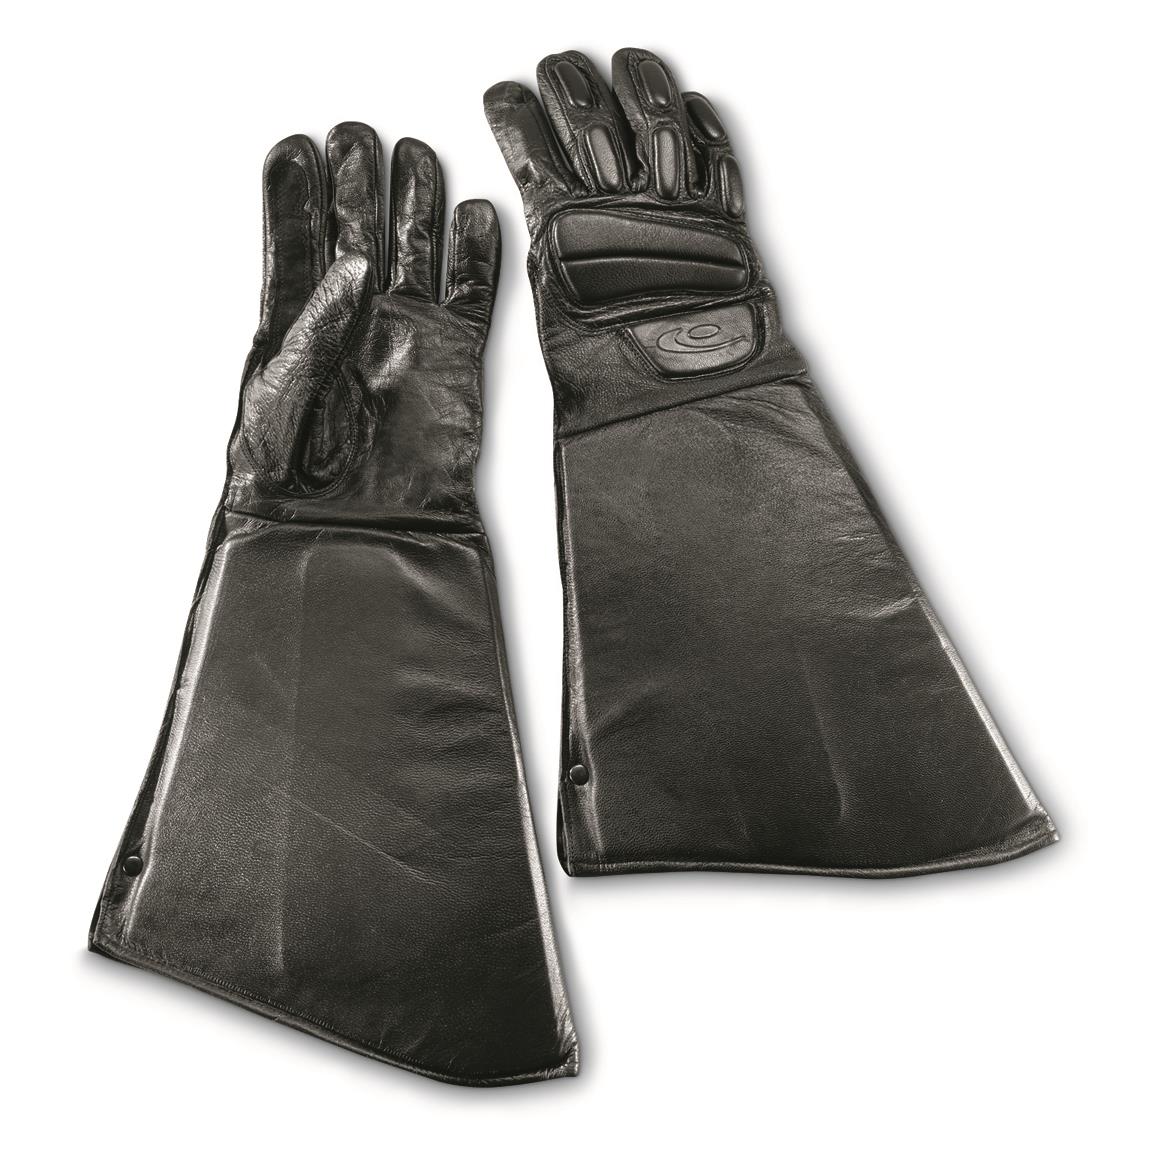 U.S. Military Surplus Hatch Dominator Riot Control Gloves, New, Black